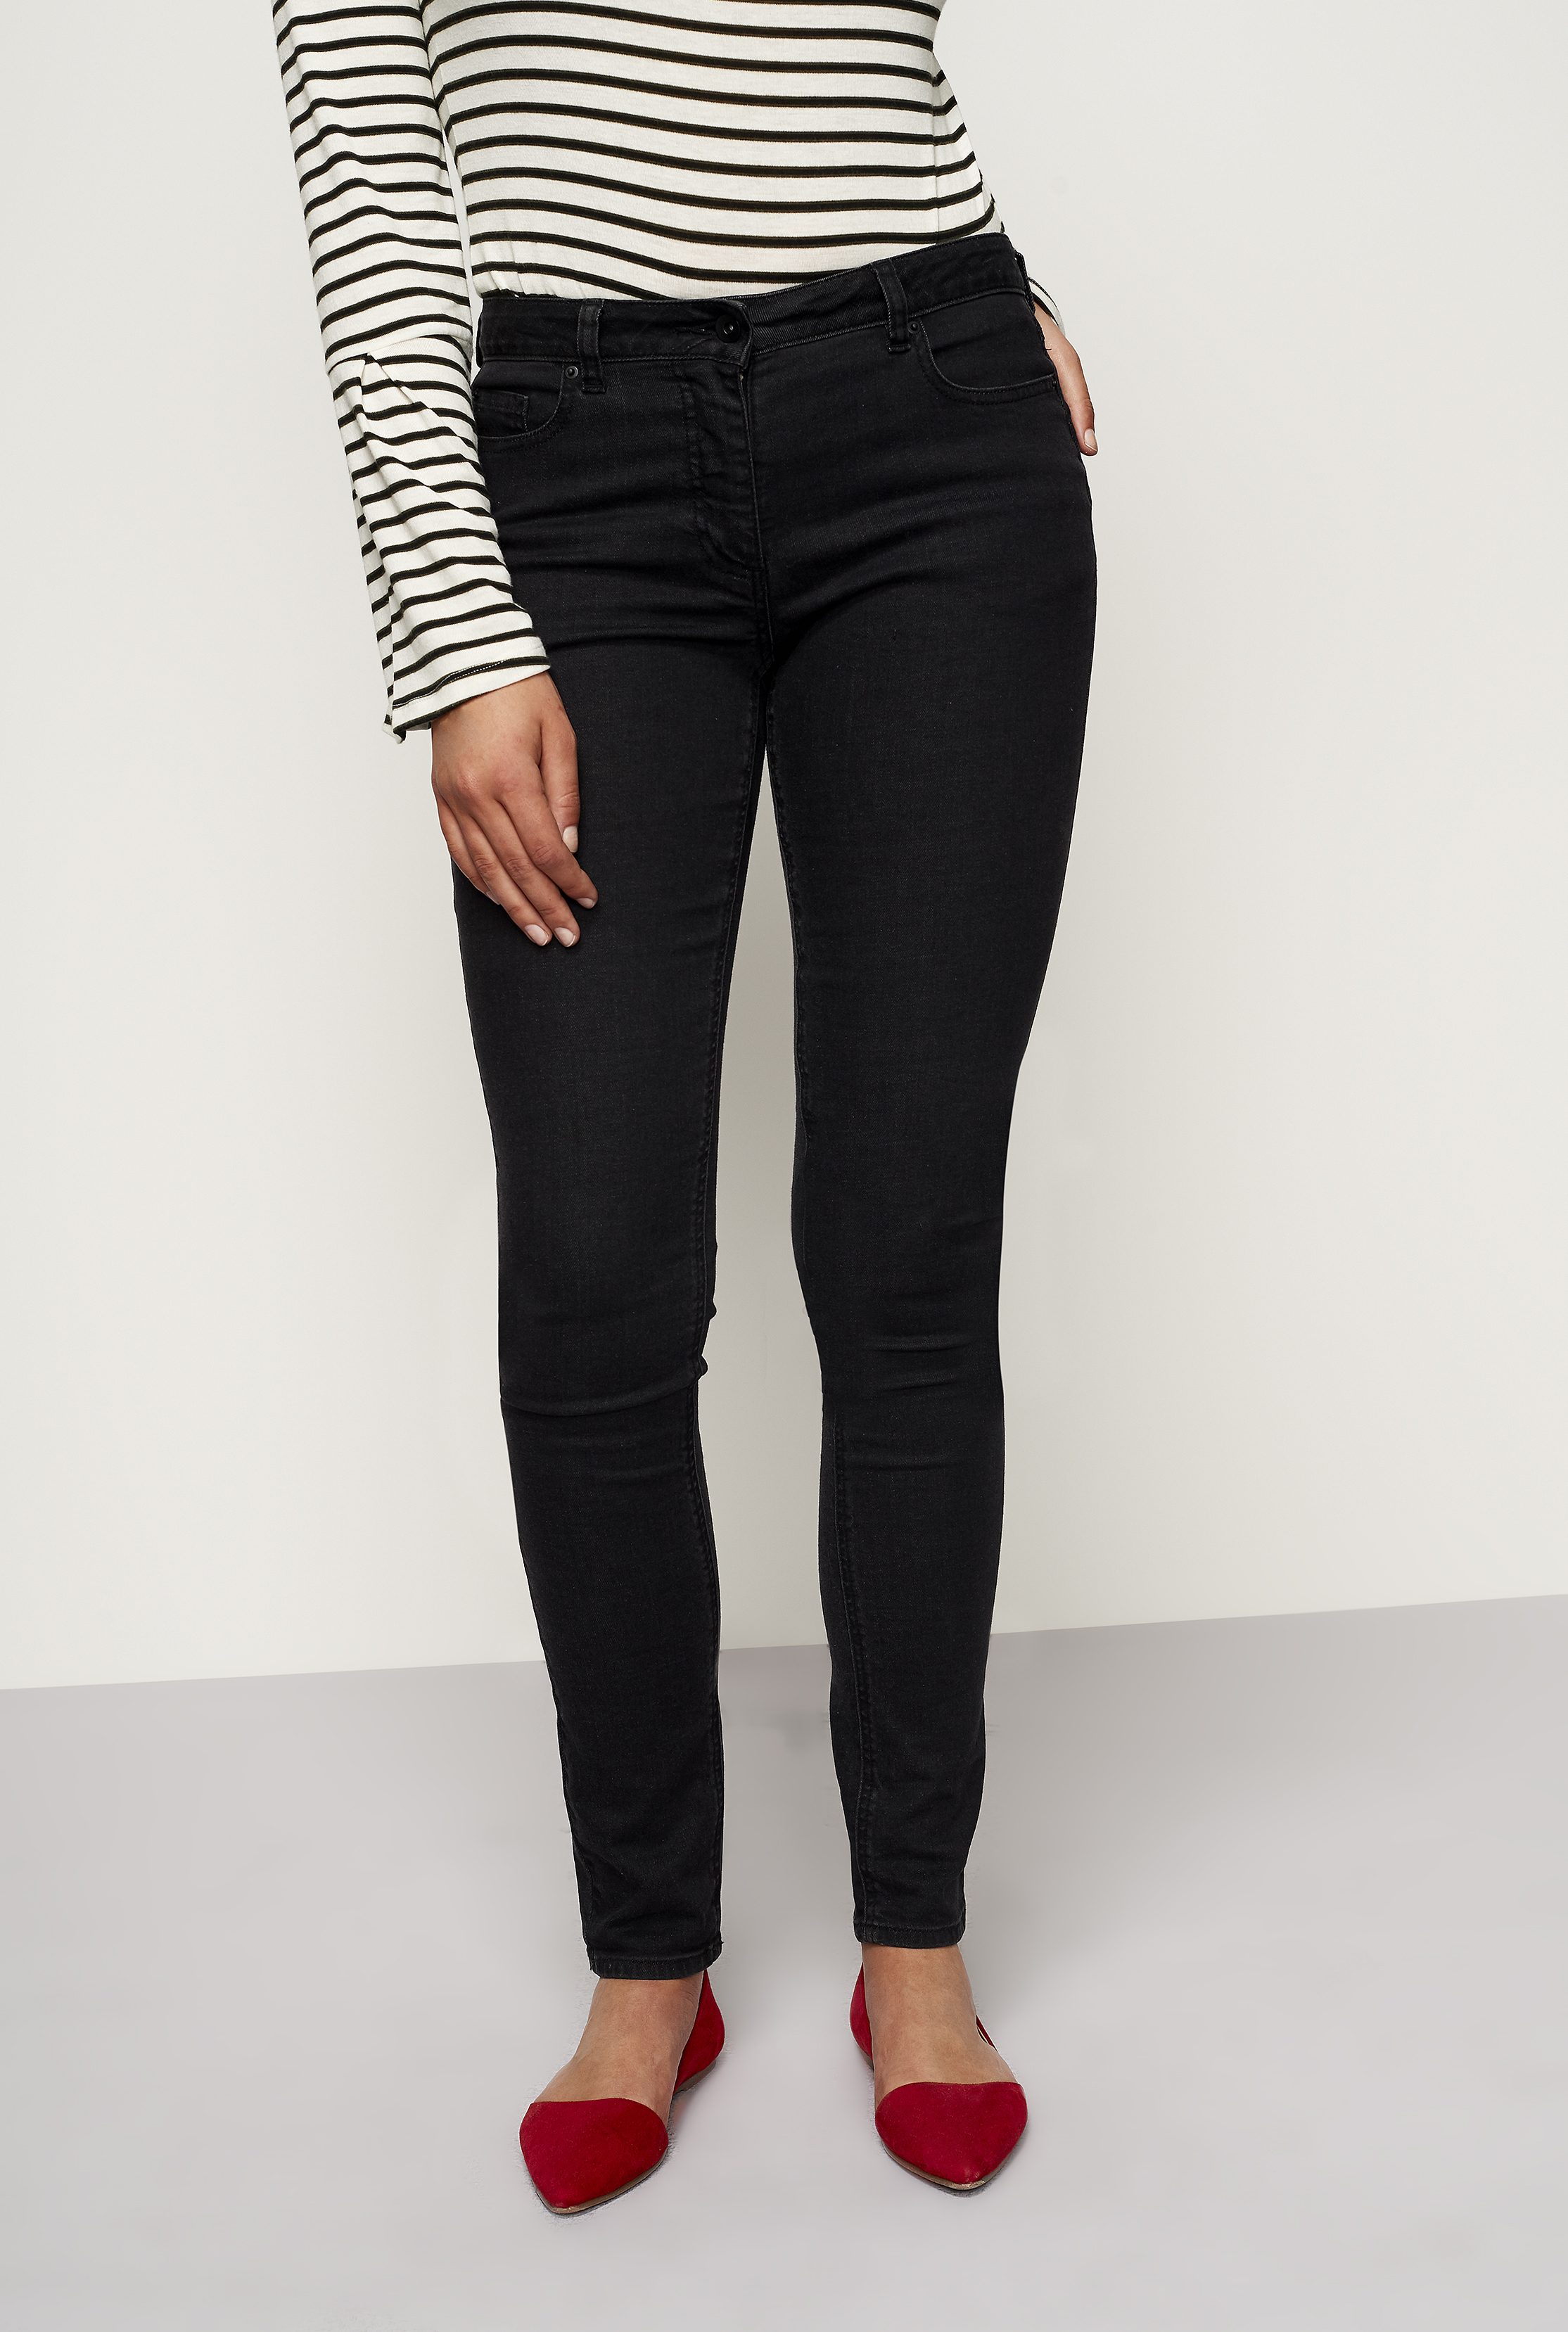 Black Shaper Low Rise Skinny Jeans | Long Tall Sally